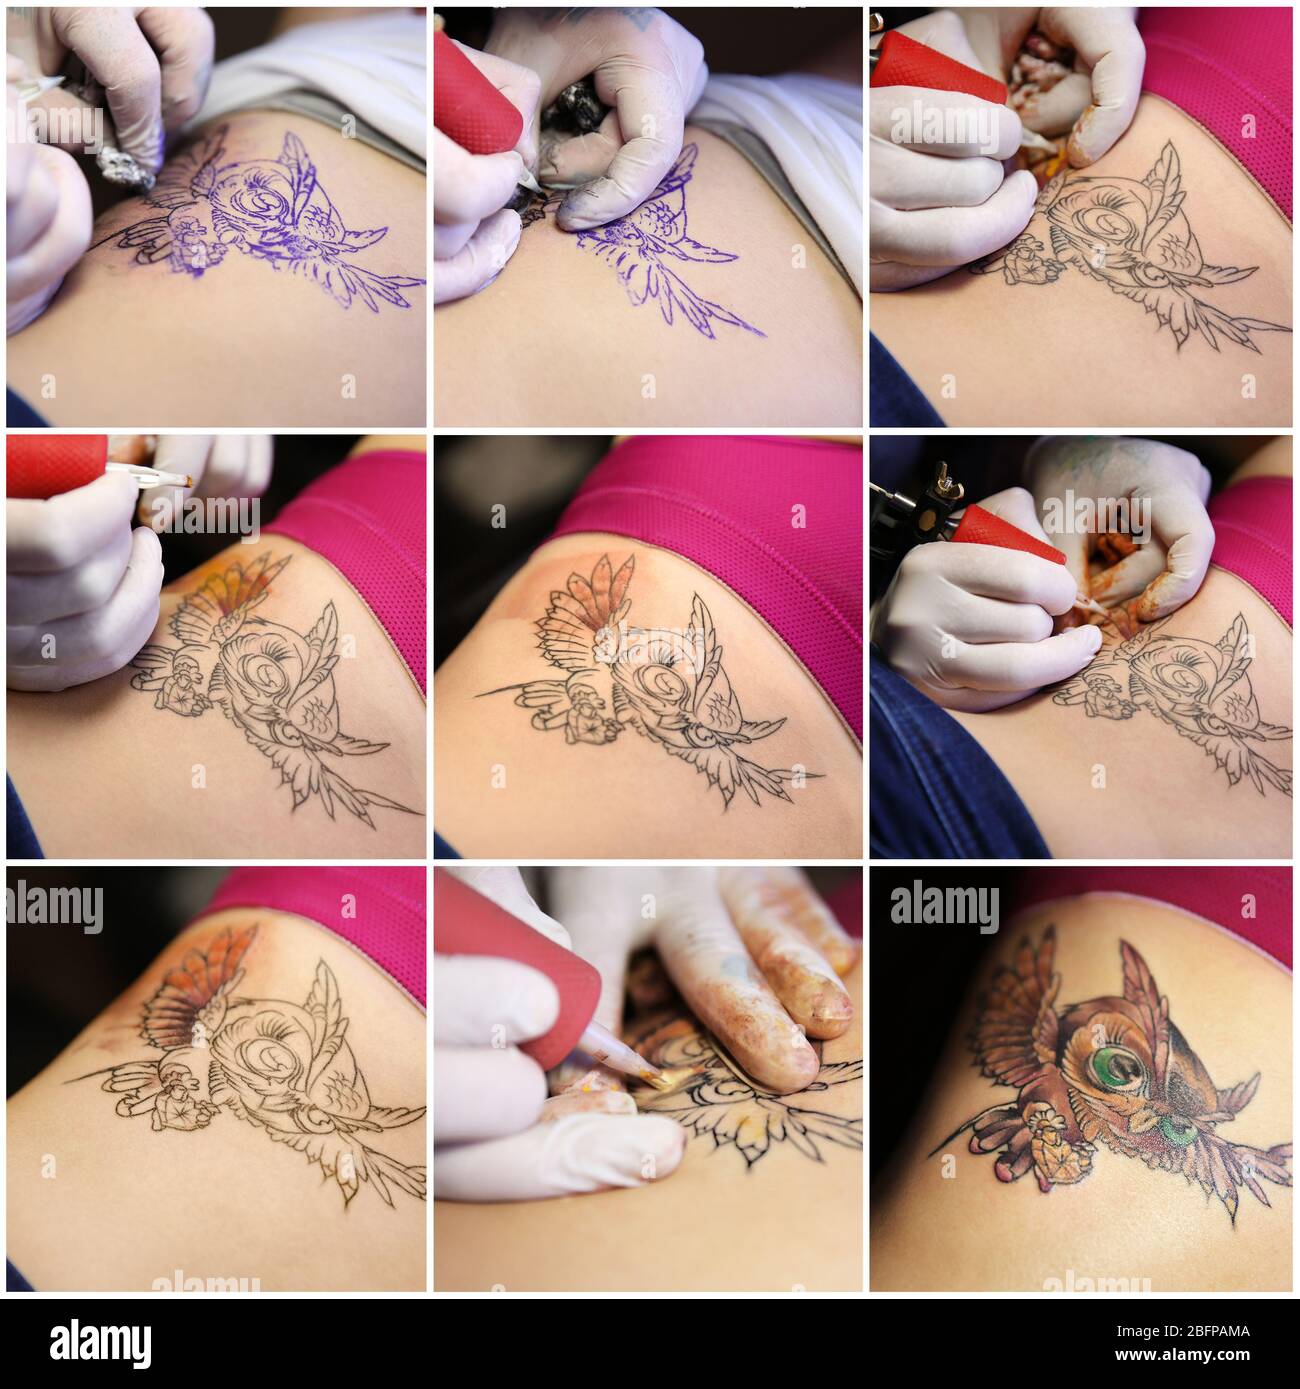 tatuaje proceso